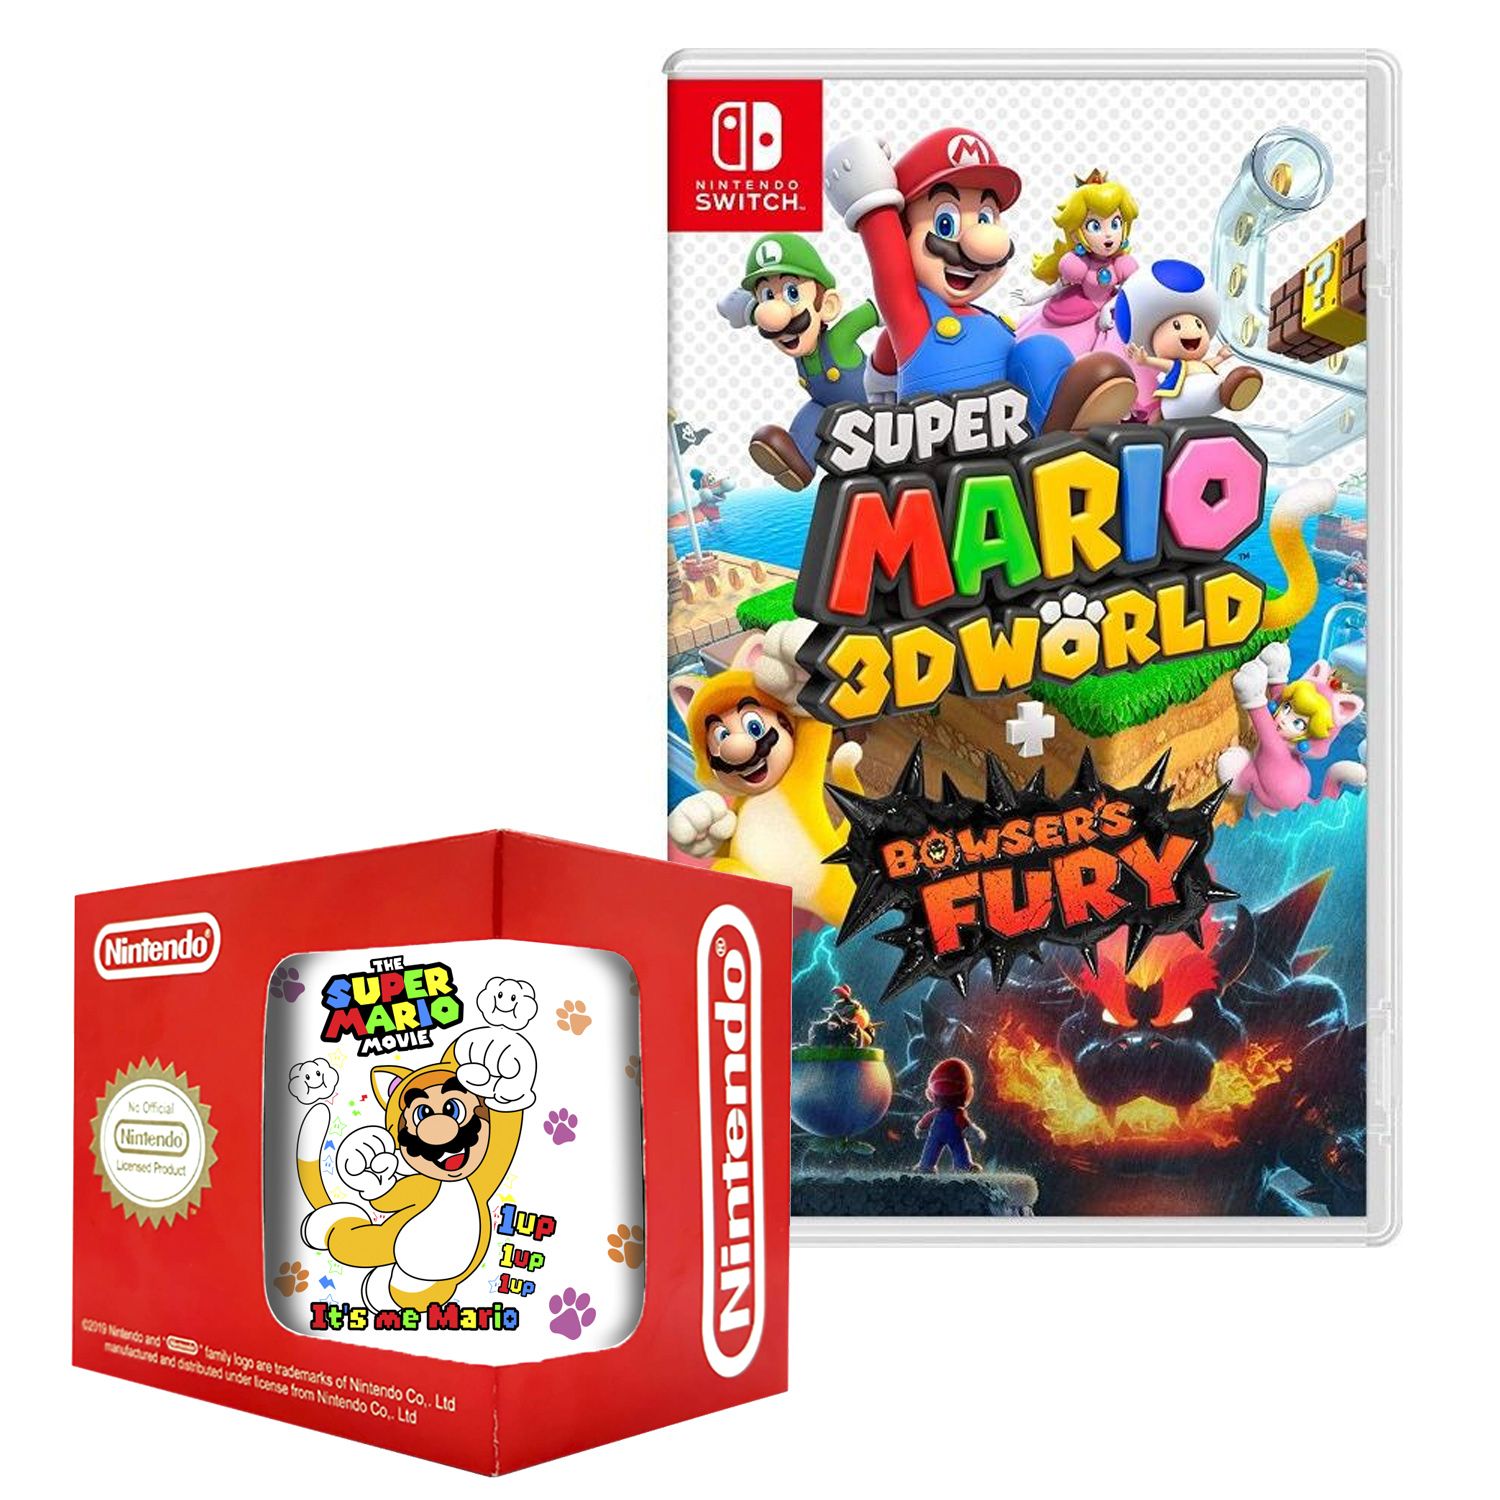 Super mario 3d world bowsers fury Nintendo Switch + taza